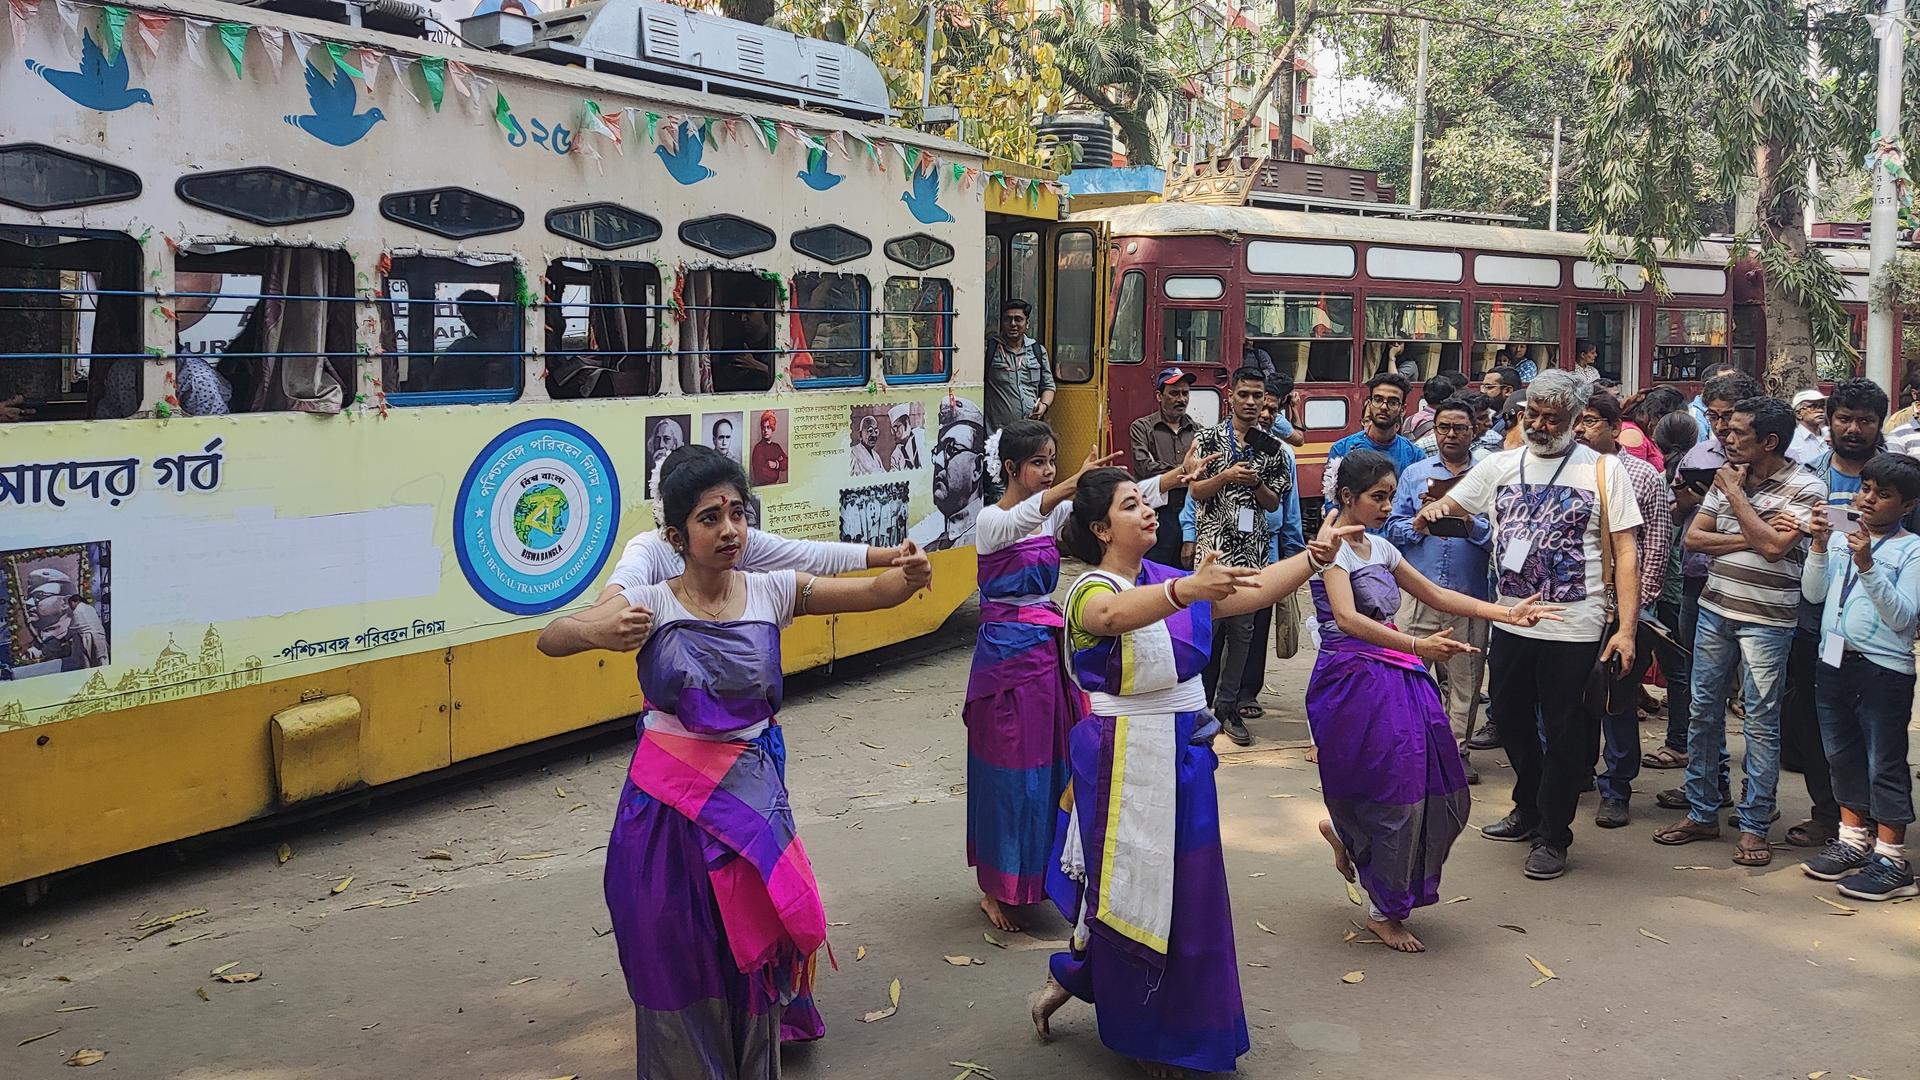 tram in Kolkata with dancers